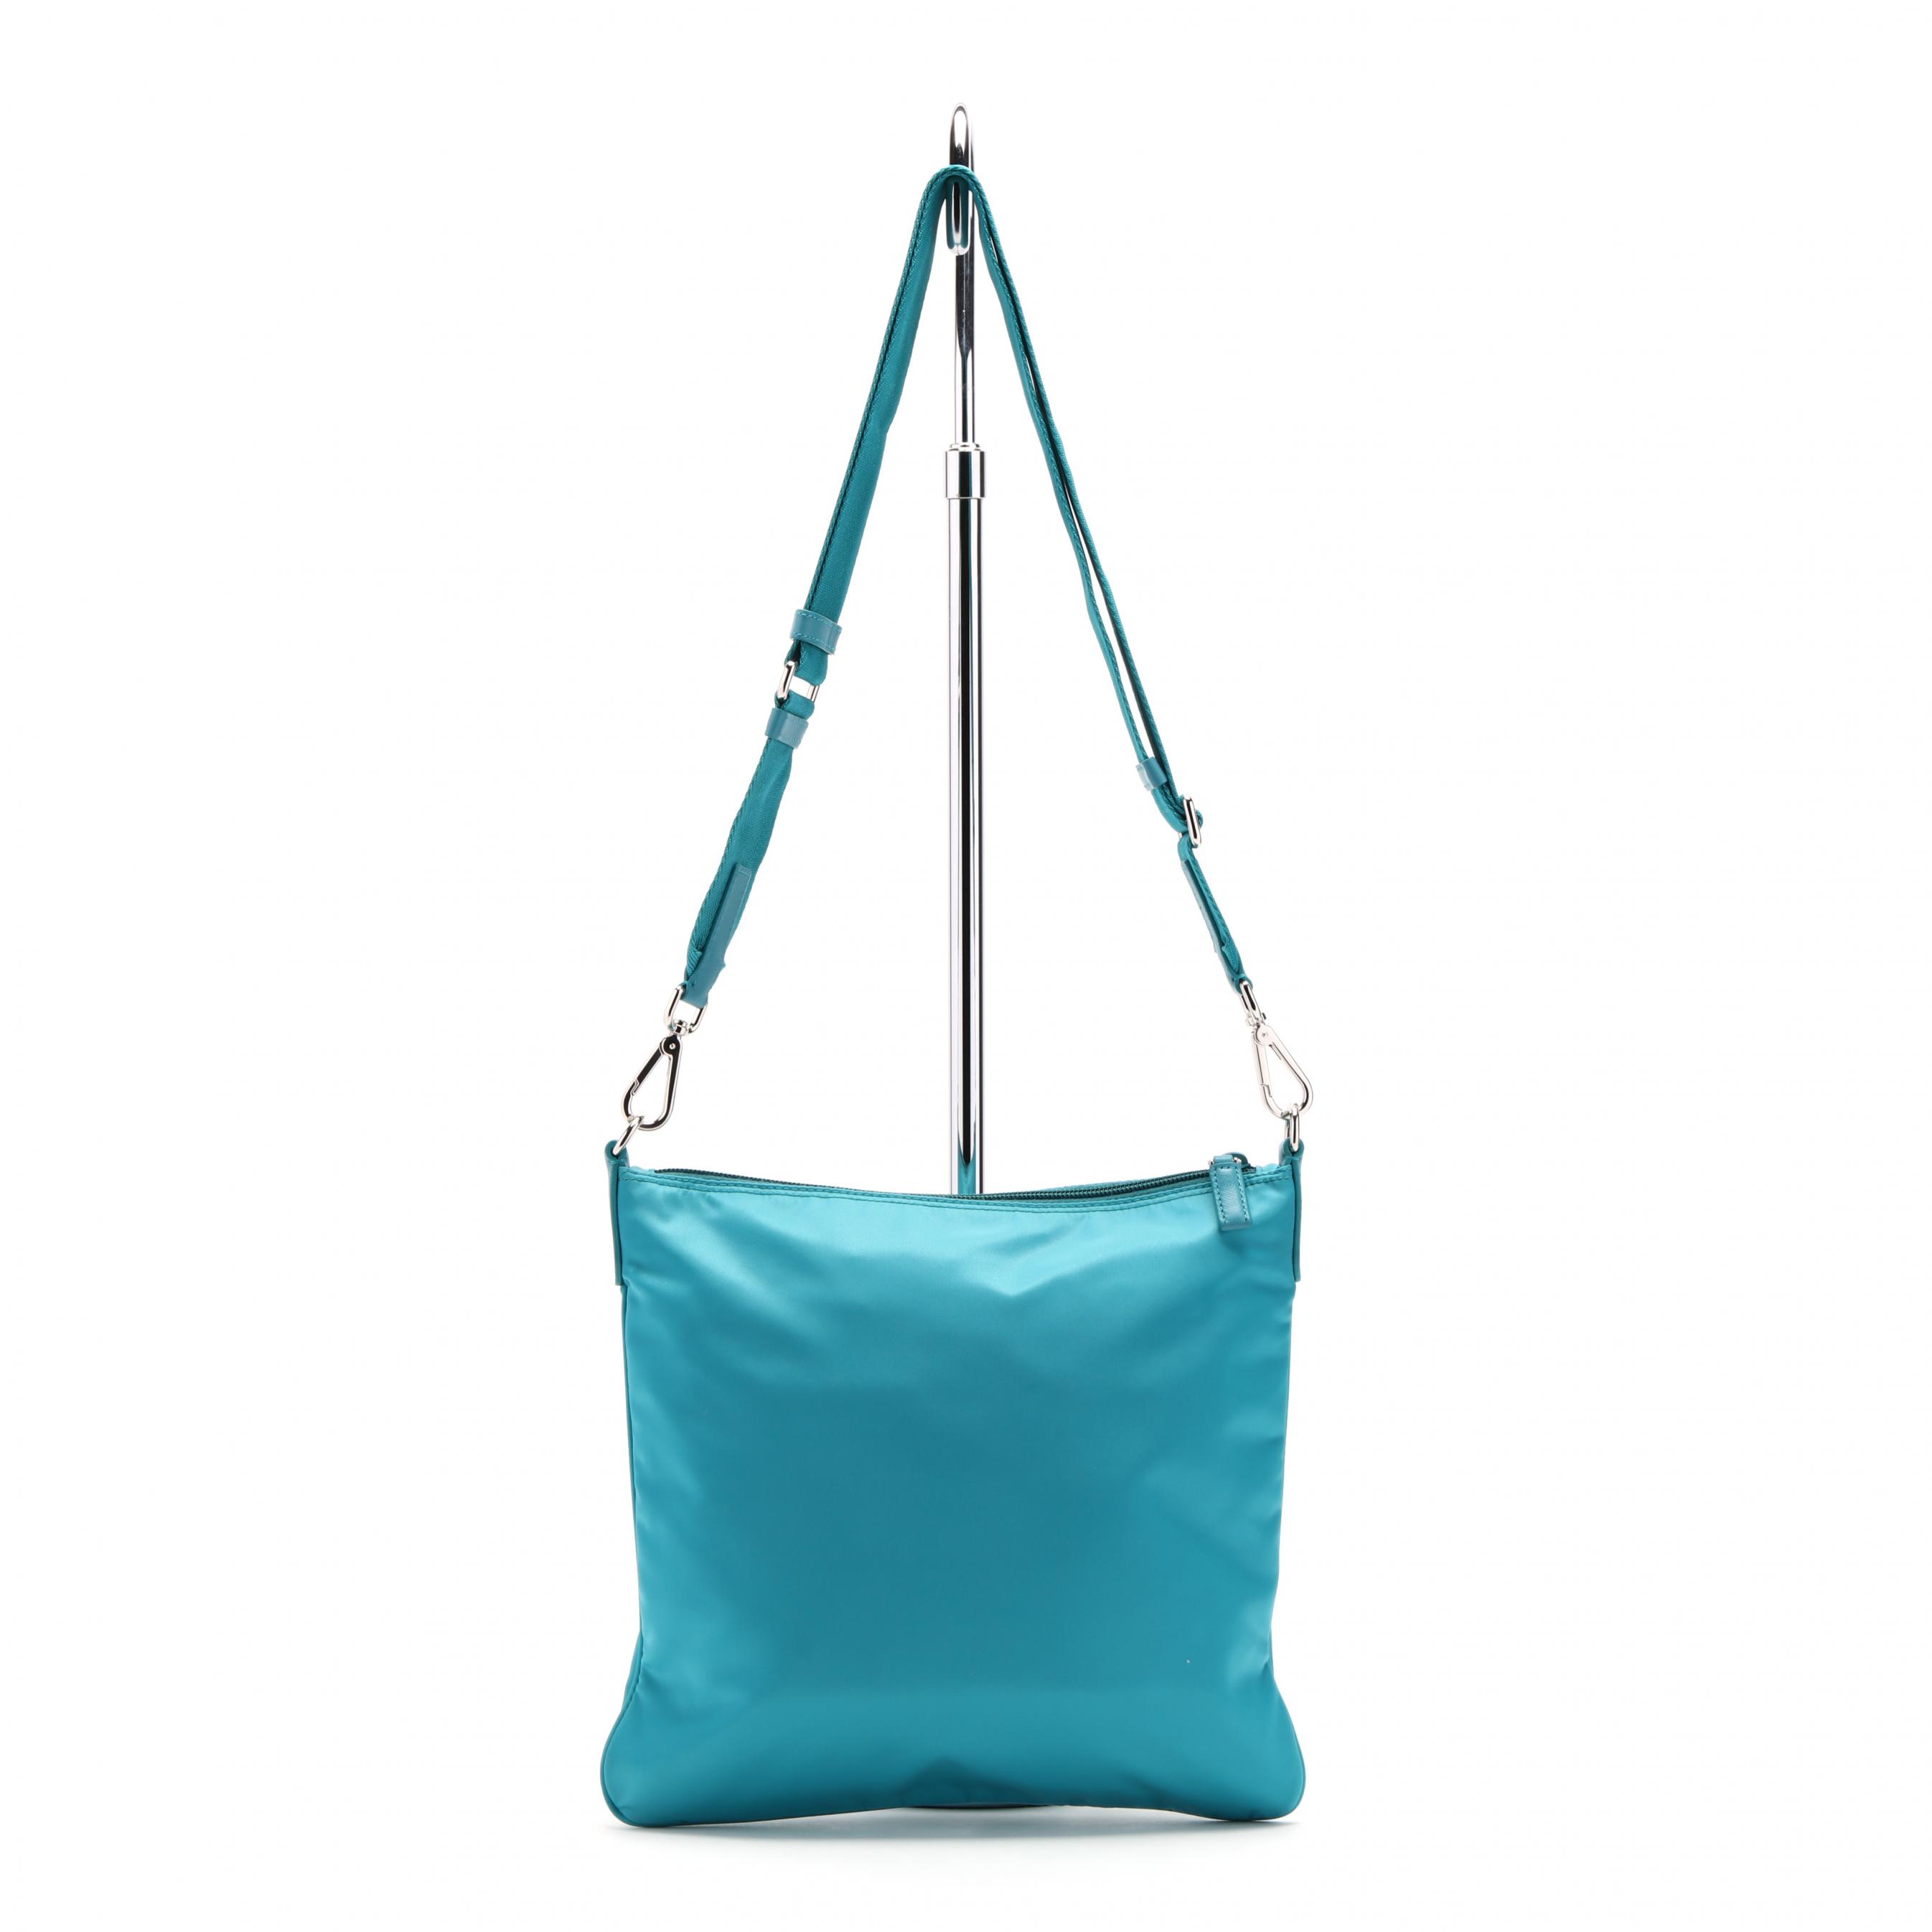 Sold at Auction: Prada Tessuto Nylon Tote Bag